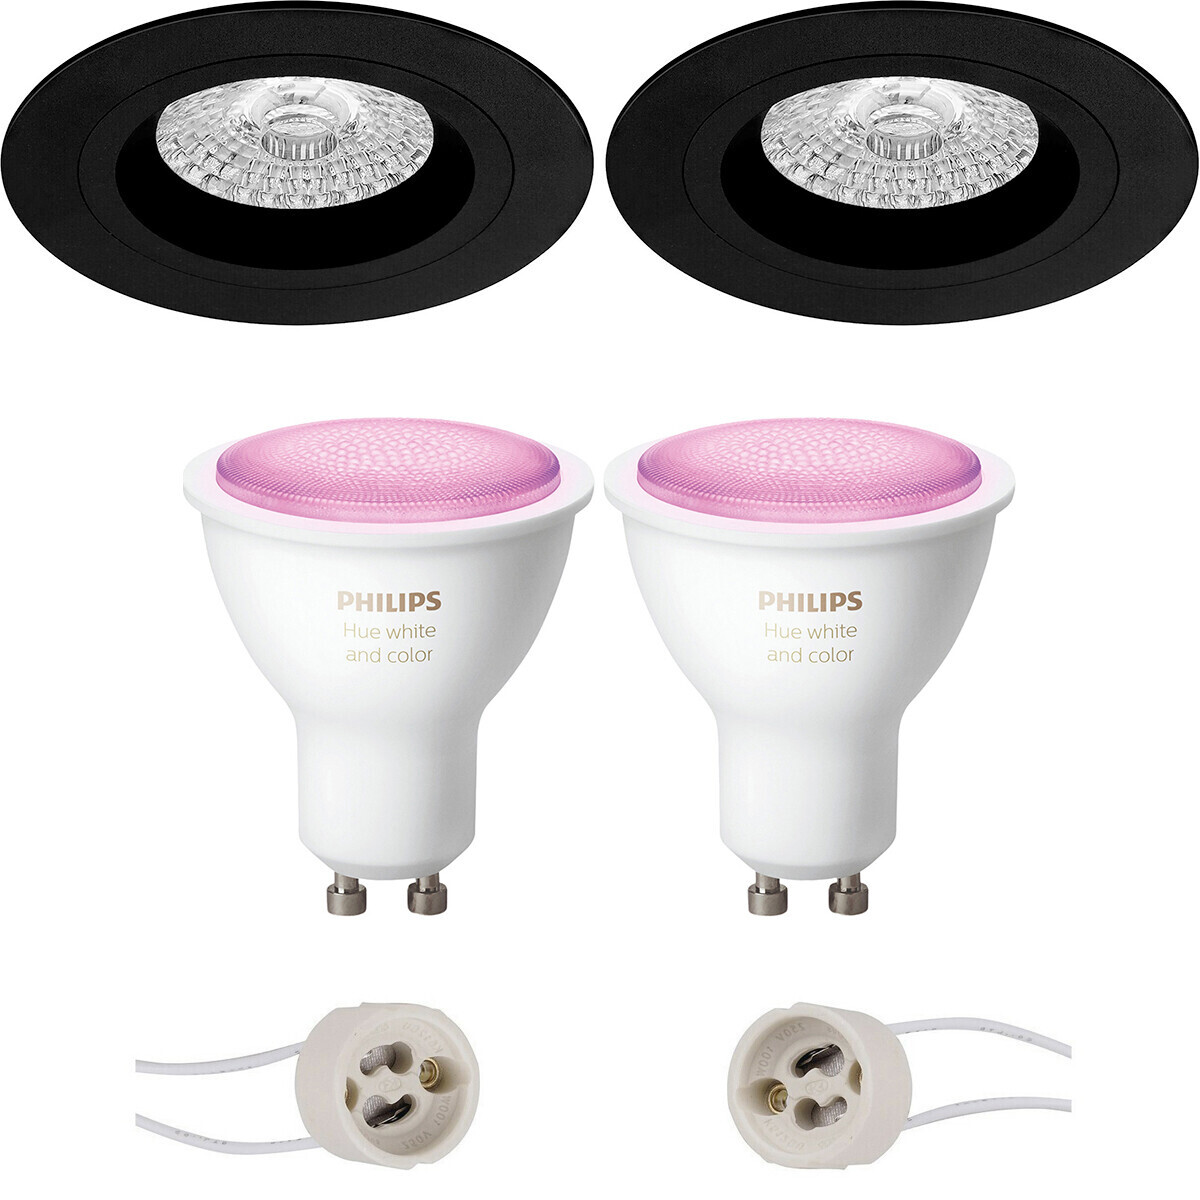 BES LED Pragmi Rodos Pro - Inbouw Rond - Mat Zwart - Ø93mm - Philips Hue - LED Spot Set GU10 - White and Color Ambiance - Bluetooth